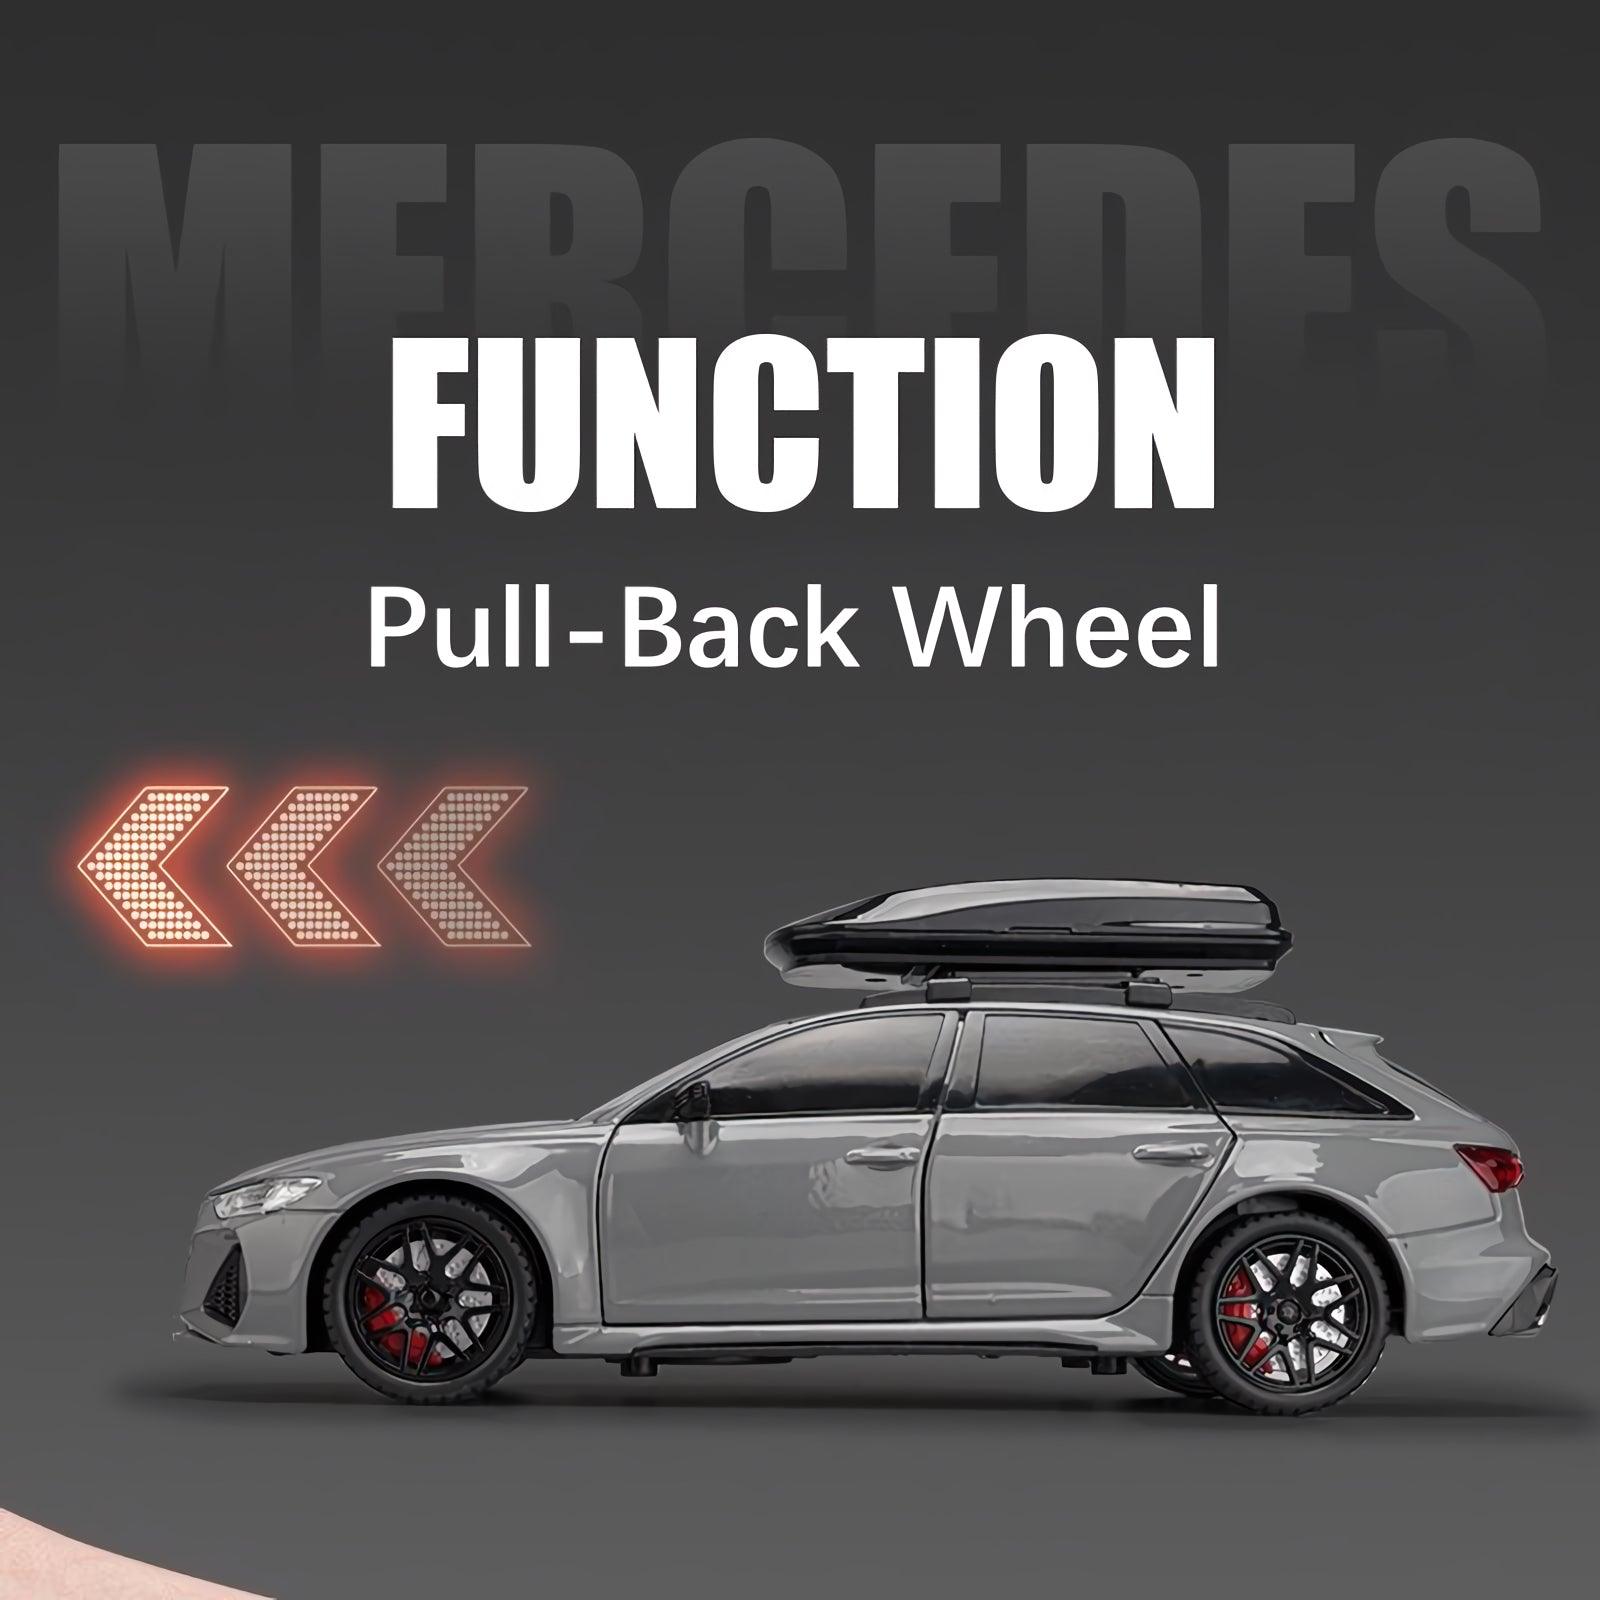 1:24 Scale Audi RS6 Alloy Car Model Toy - Precision Craftsmanship Meets Automotive Excellence - PANSEKtoy